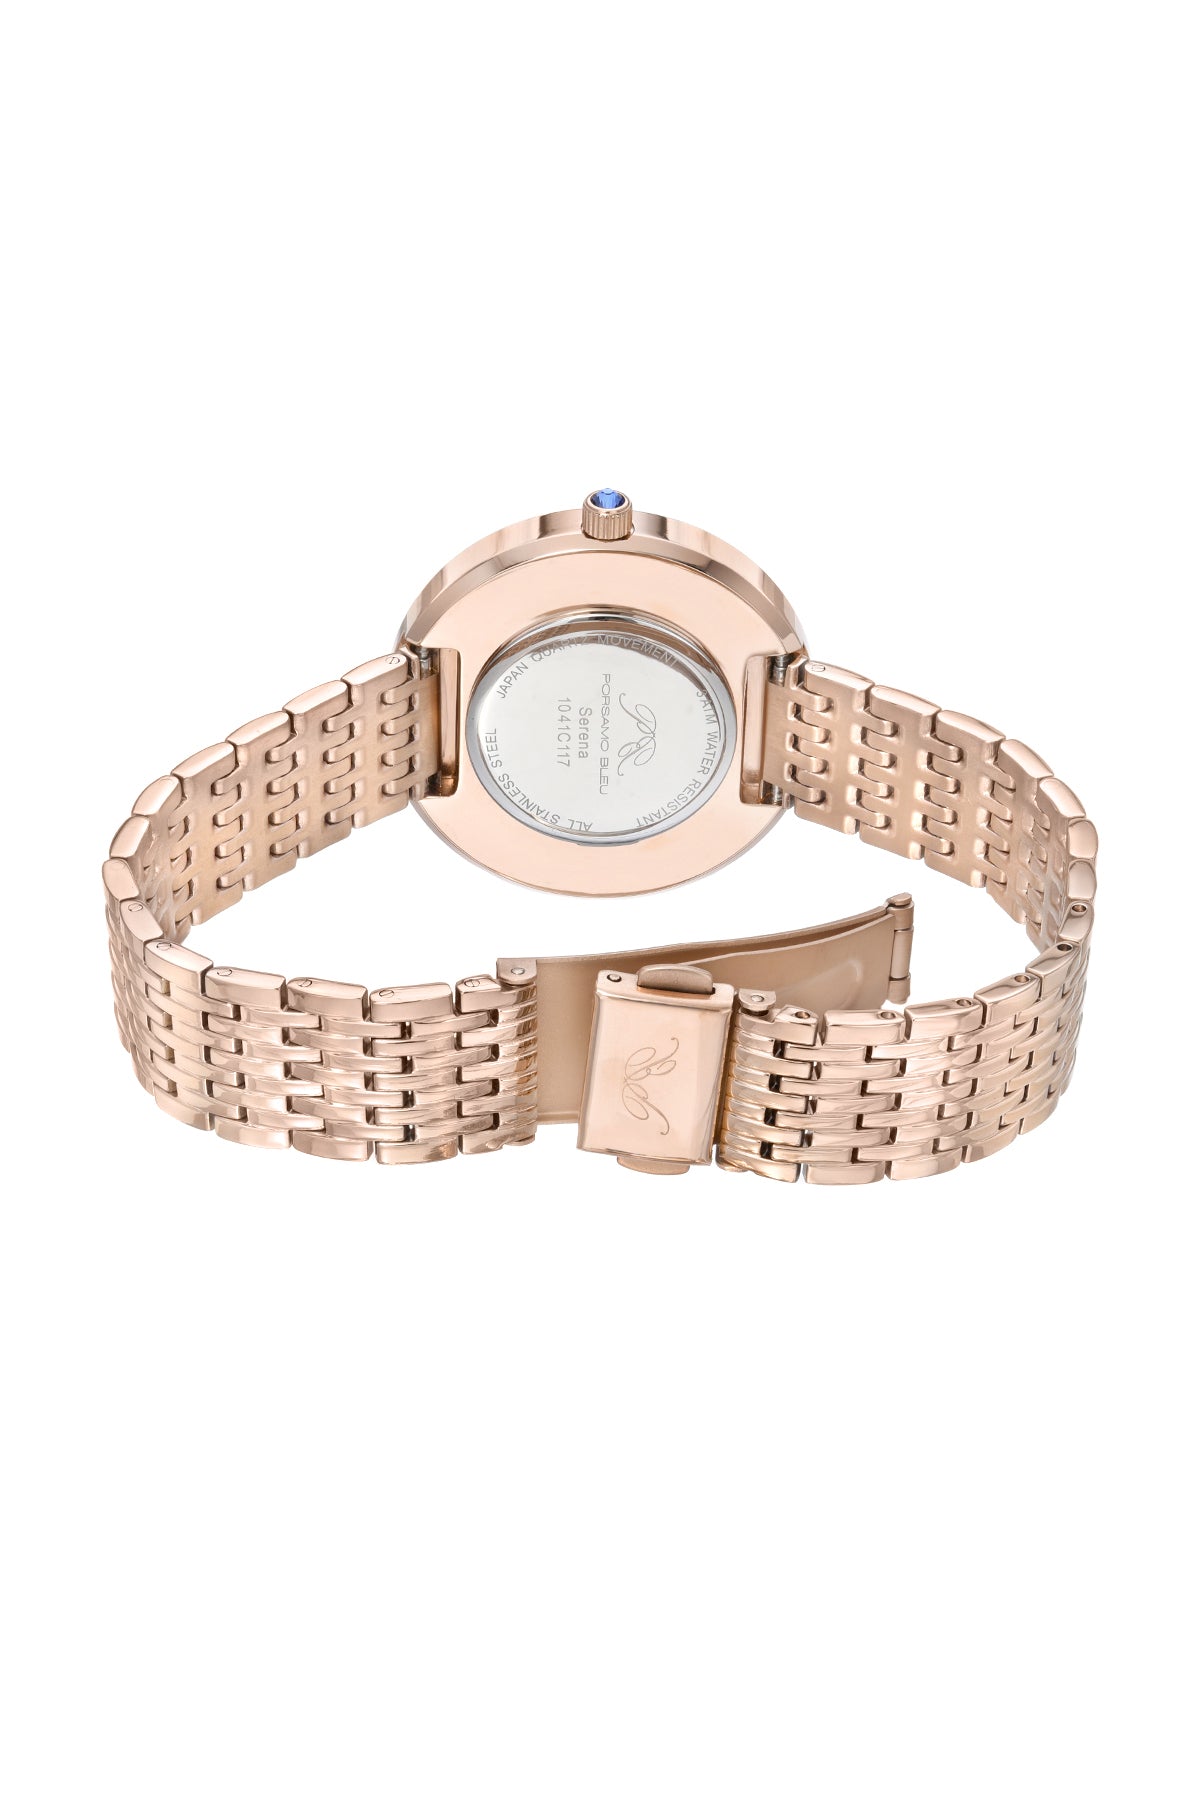 Porsamo Bleu Serena Luxury Women's Crystal Set Bezel Stainless Steel Watch, Rose 1041CSES